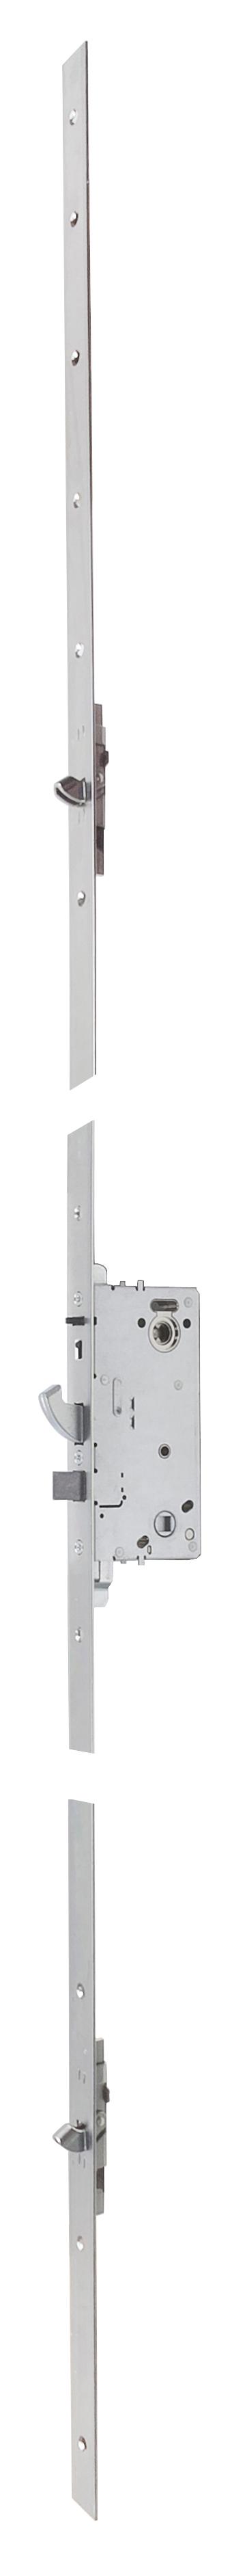 Ruko YD 3-point locking box - 2000mm H, D 50 mm, 25 mm post